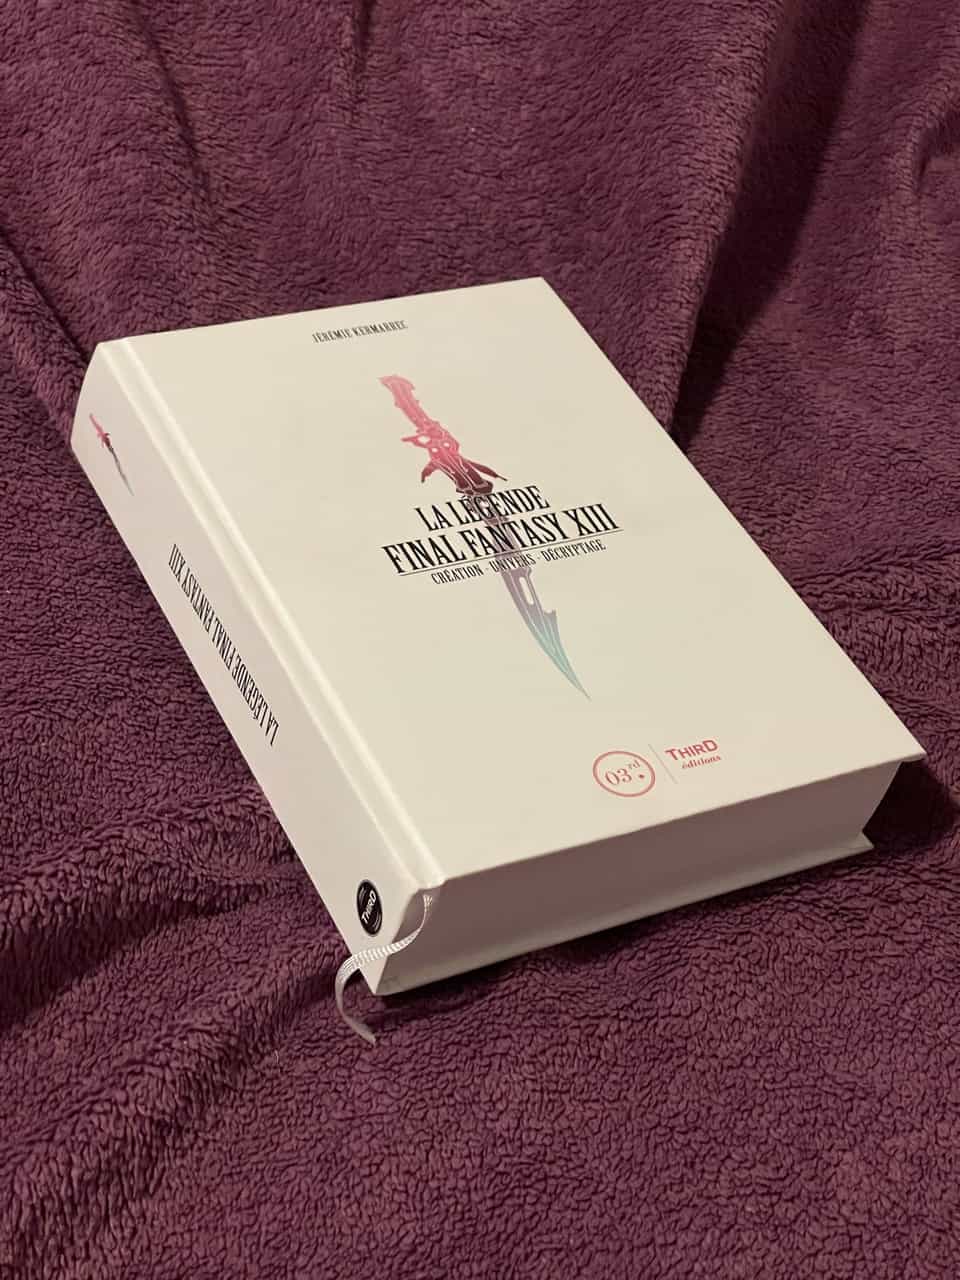 La Légende de Final Fantasy XIII